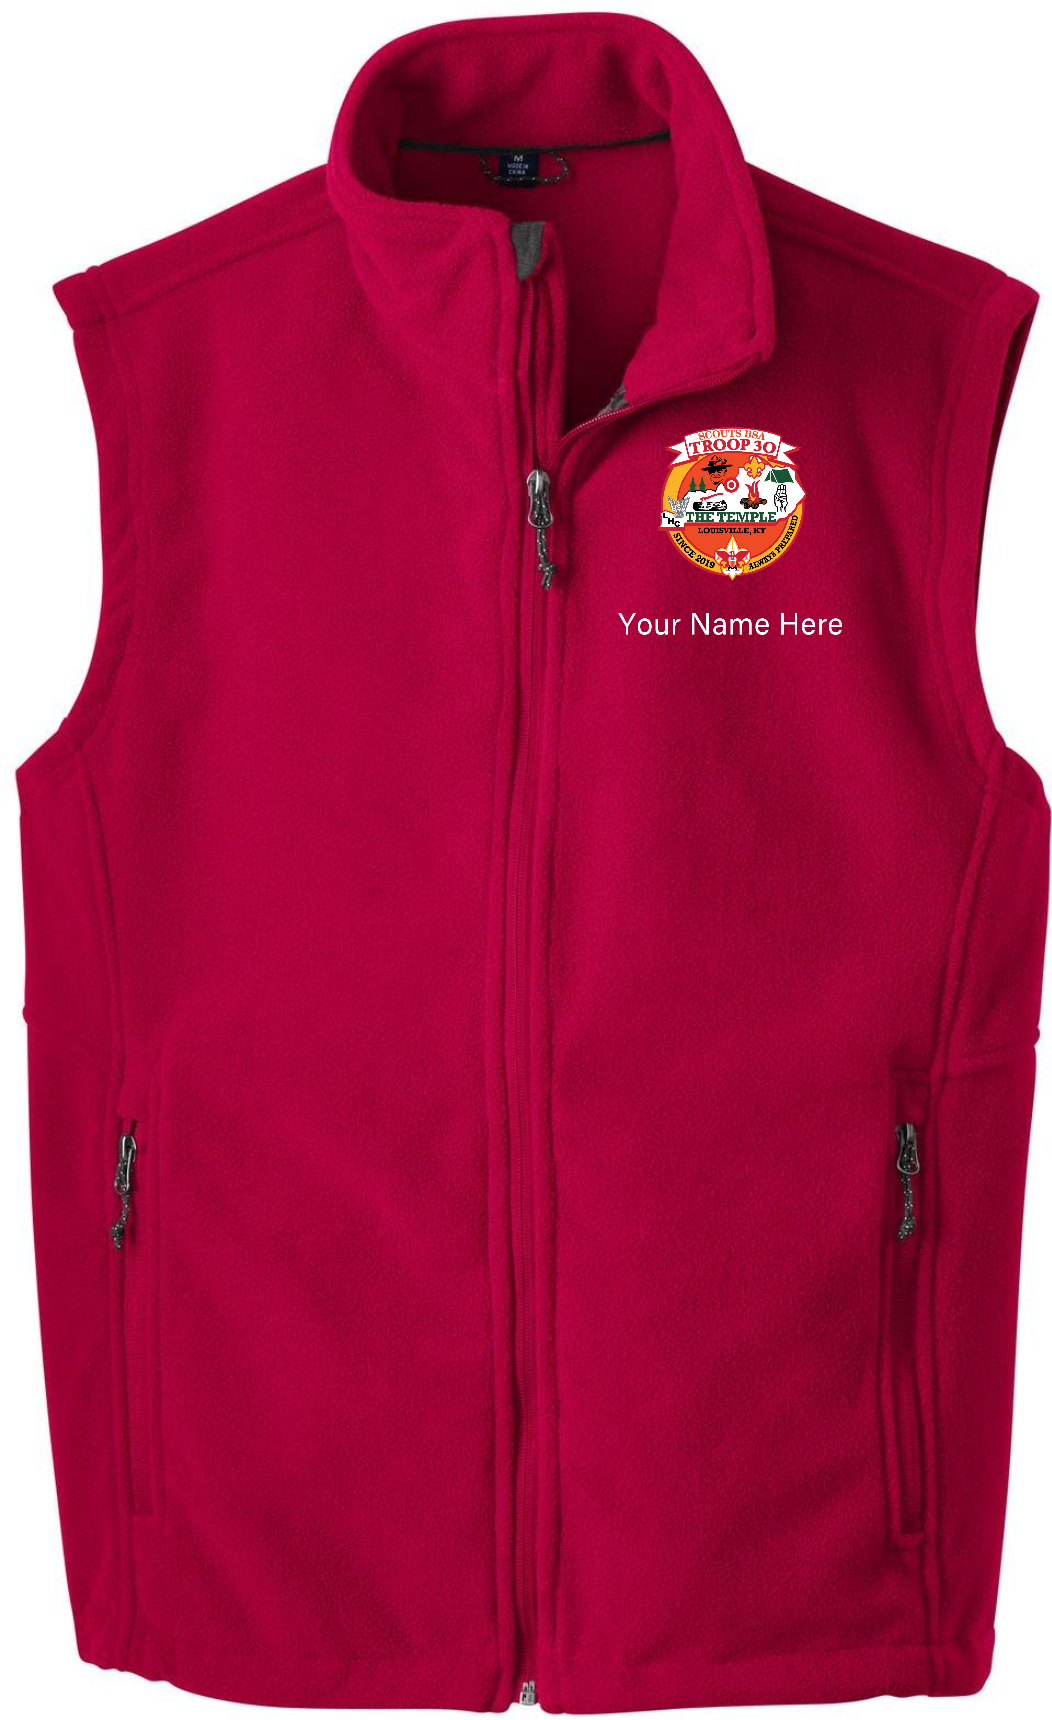 Port Authority ® Value Fleece Vest F219 (Girls/Name)